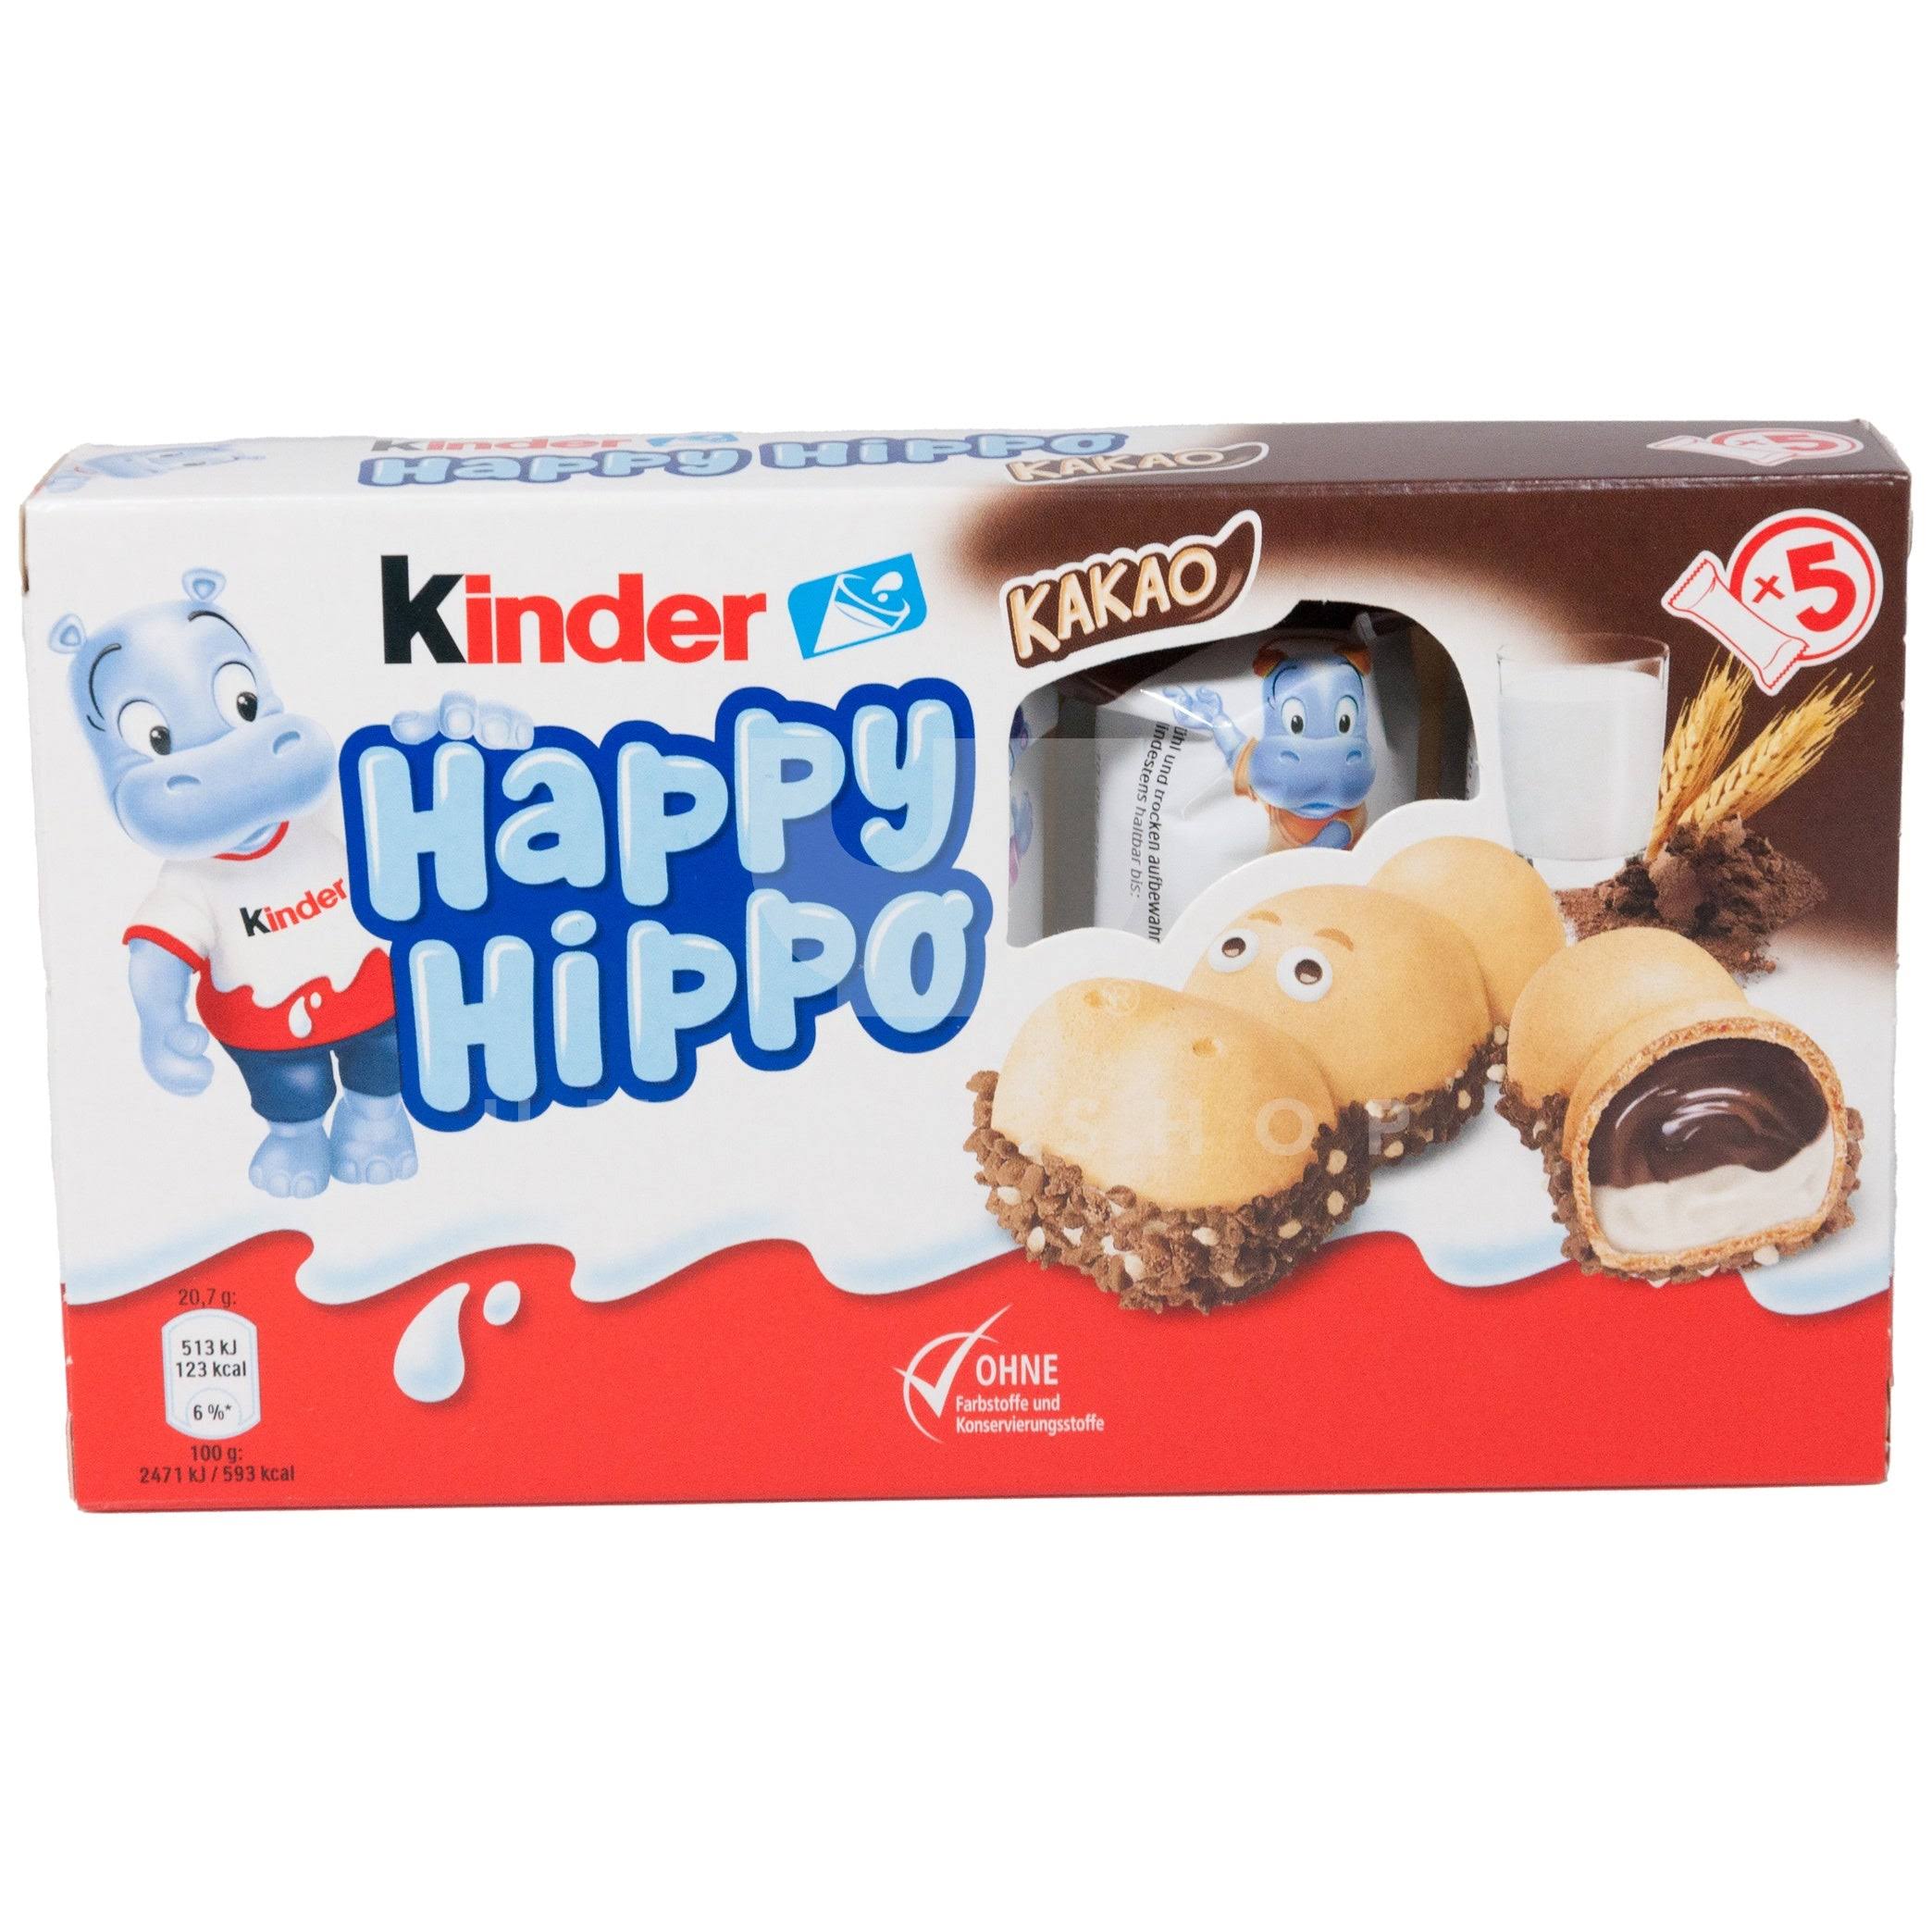 Kinder Happy Hippo - Cocoa